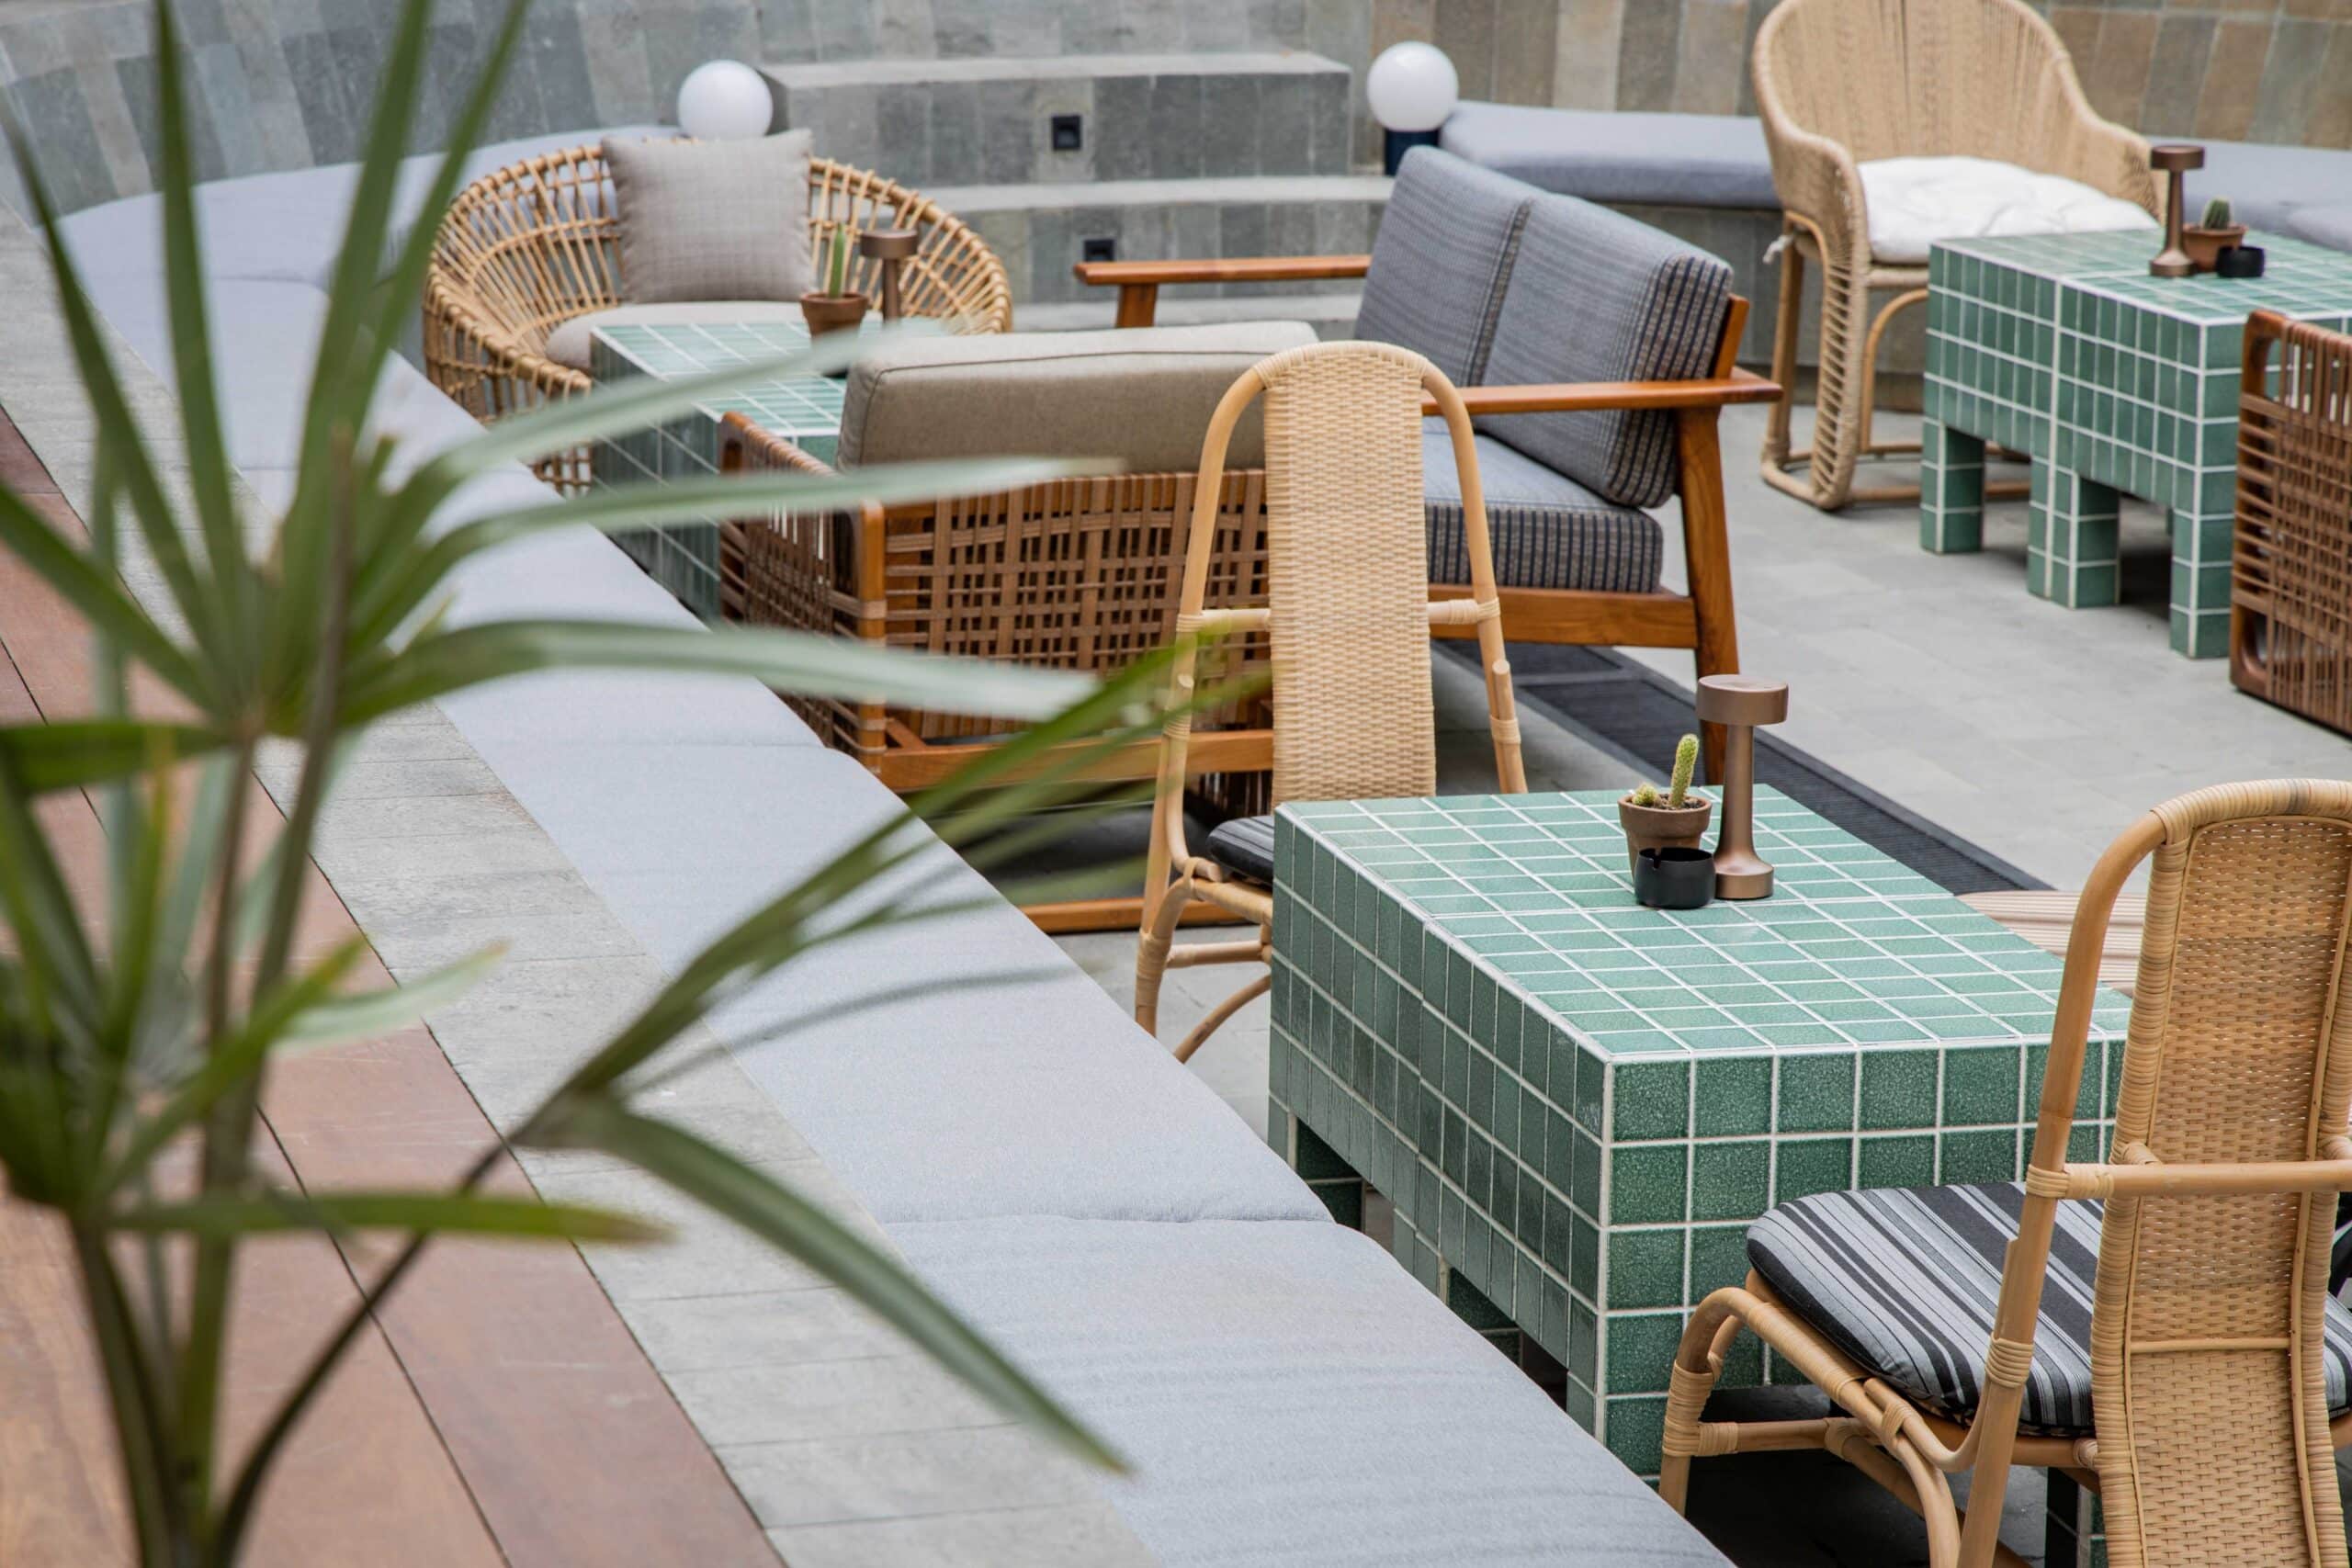 Restaurant Design - Luma Bali - Interior Design - Architecture - Architect Bali - Sunken Lounge Furniture